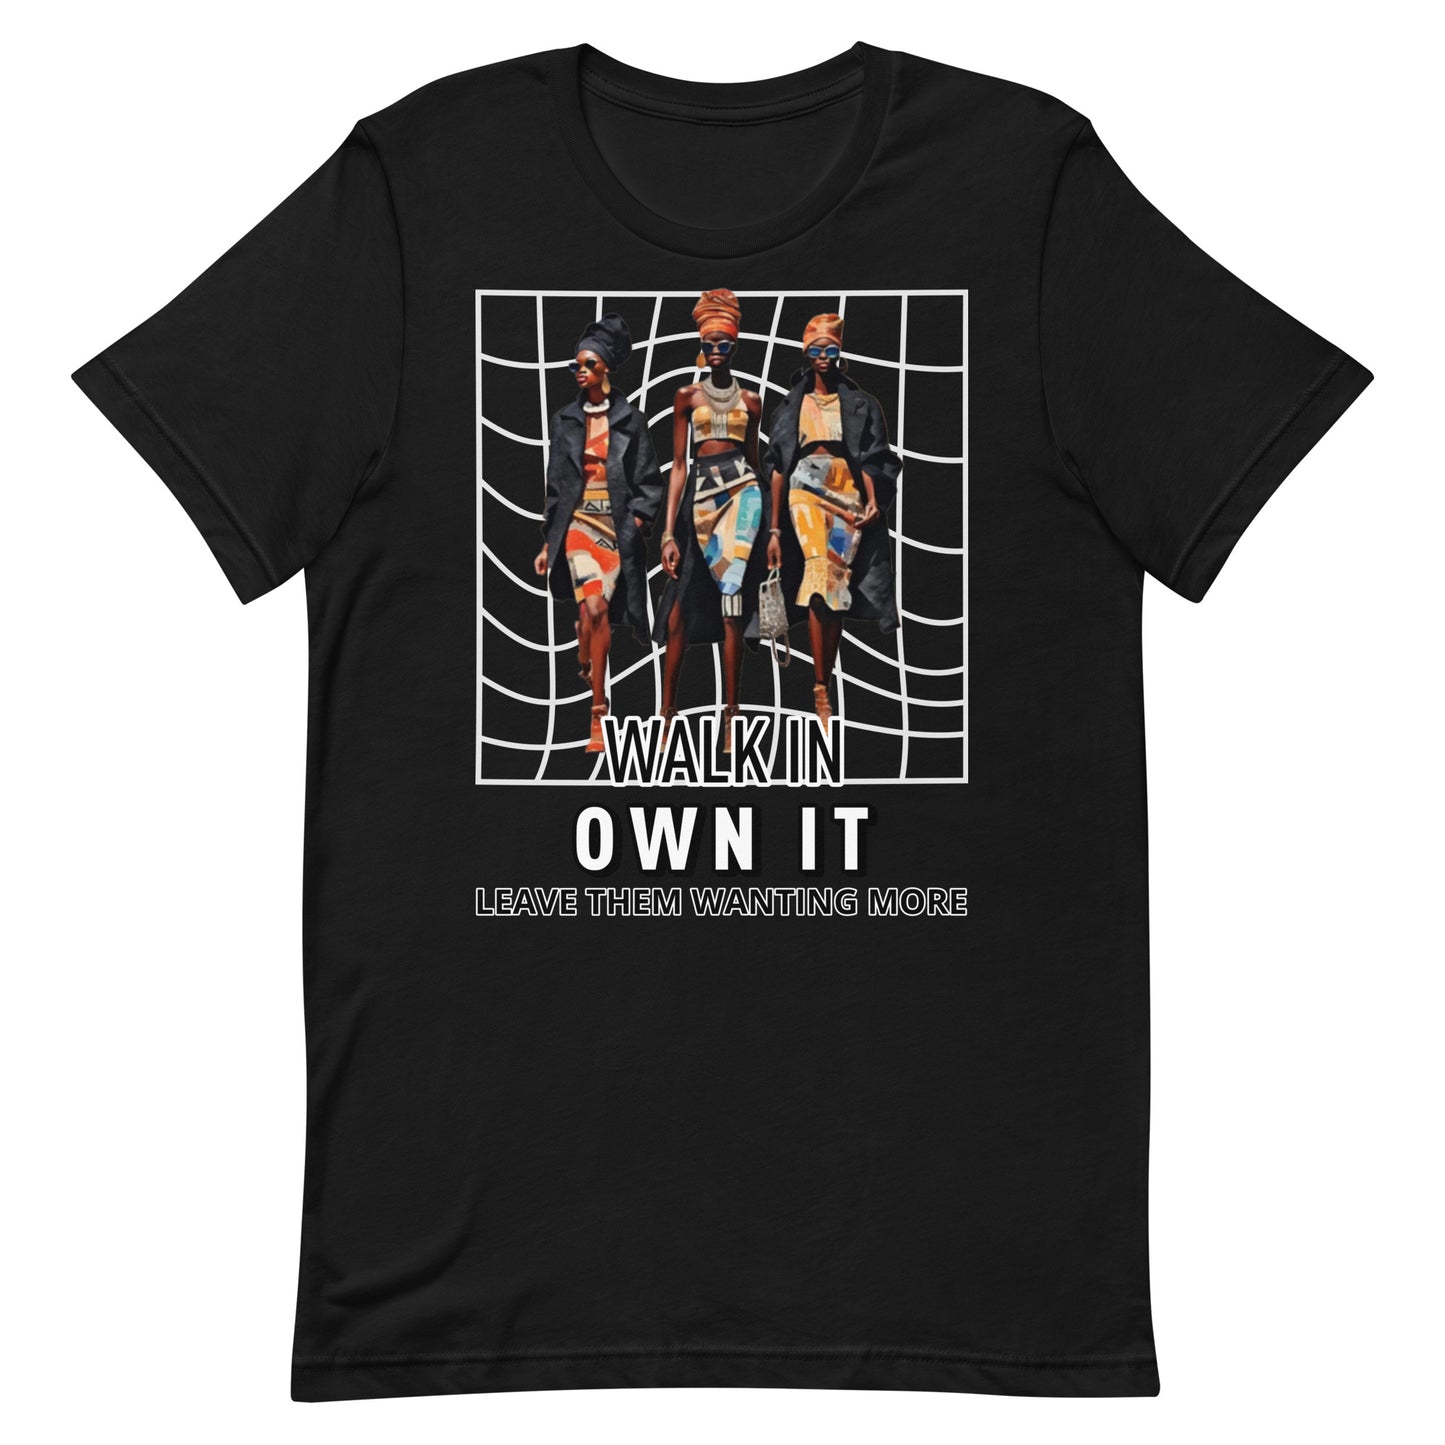 'own it' t-shirt